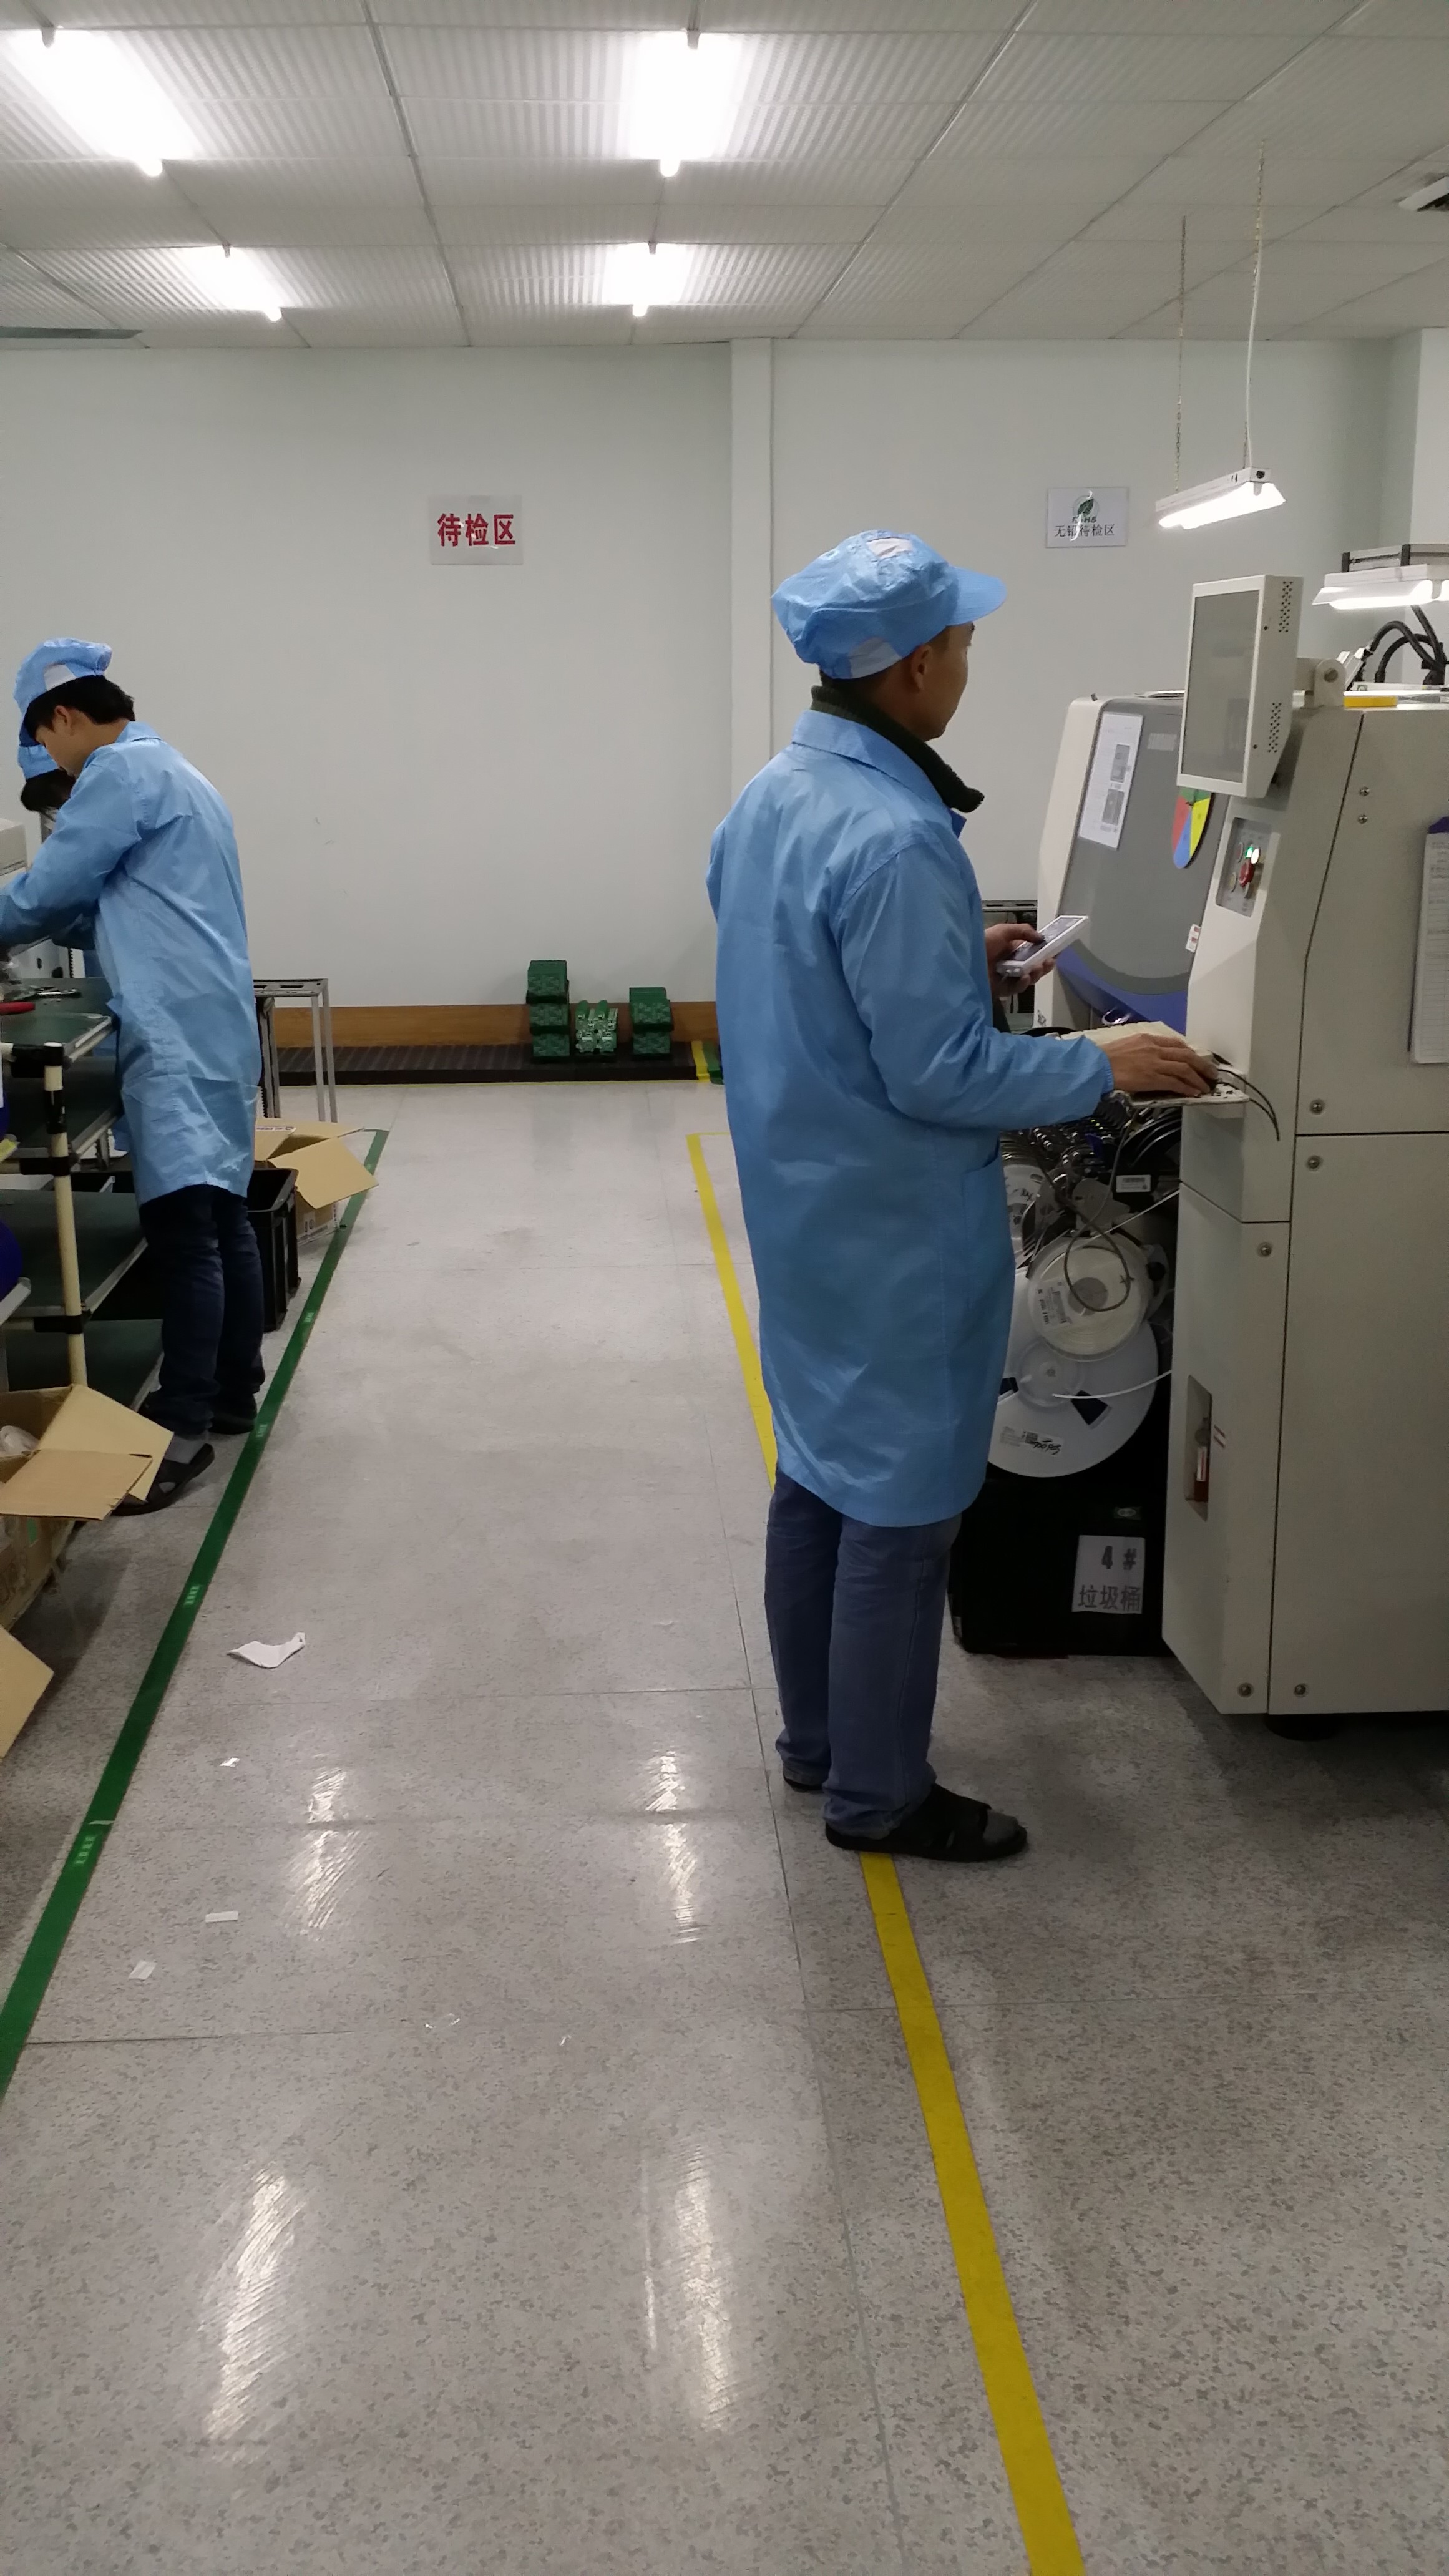 GZ TOPSHINE TECHNOLOGY LIMITED linea di produzione in fabbrica